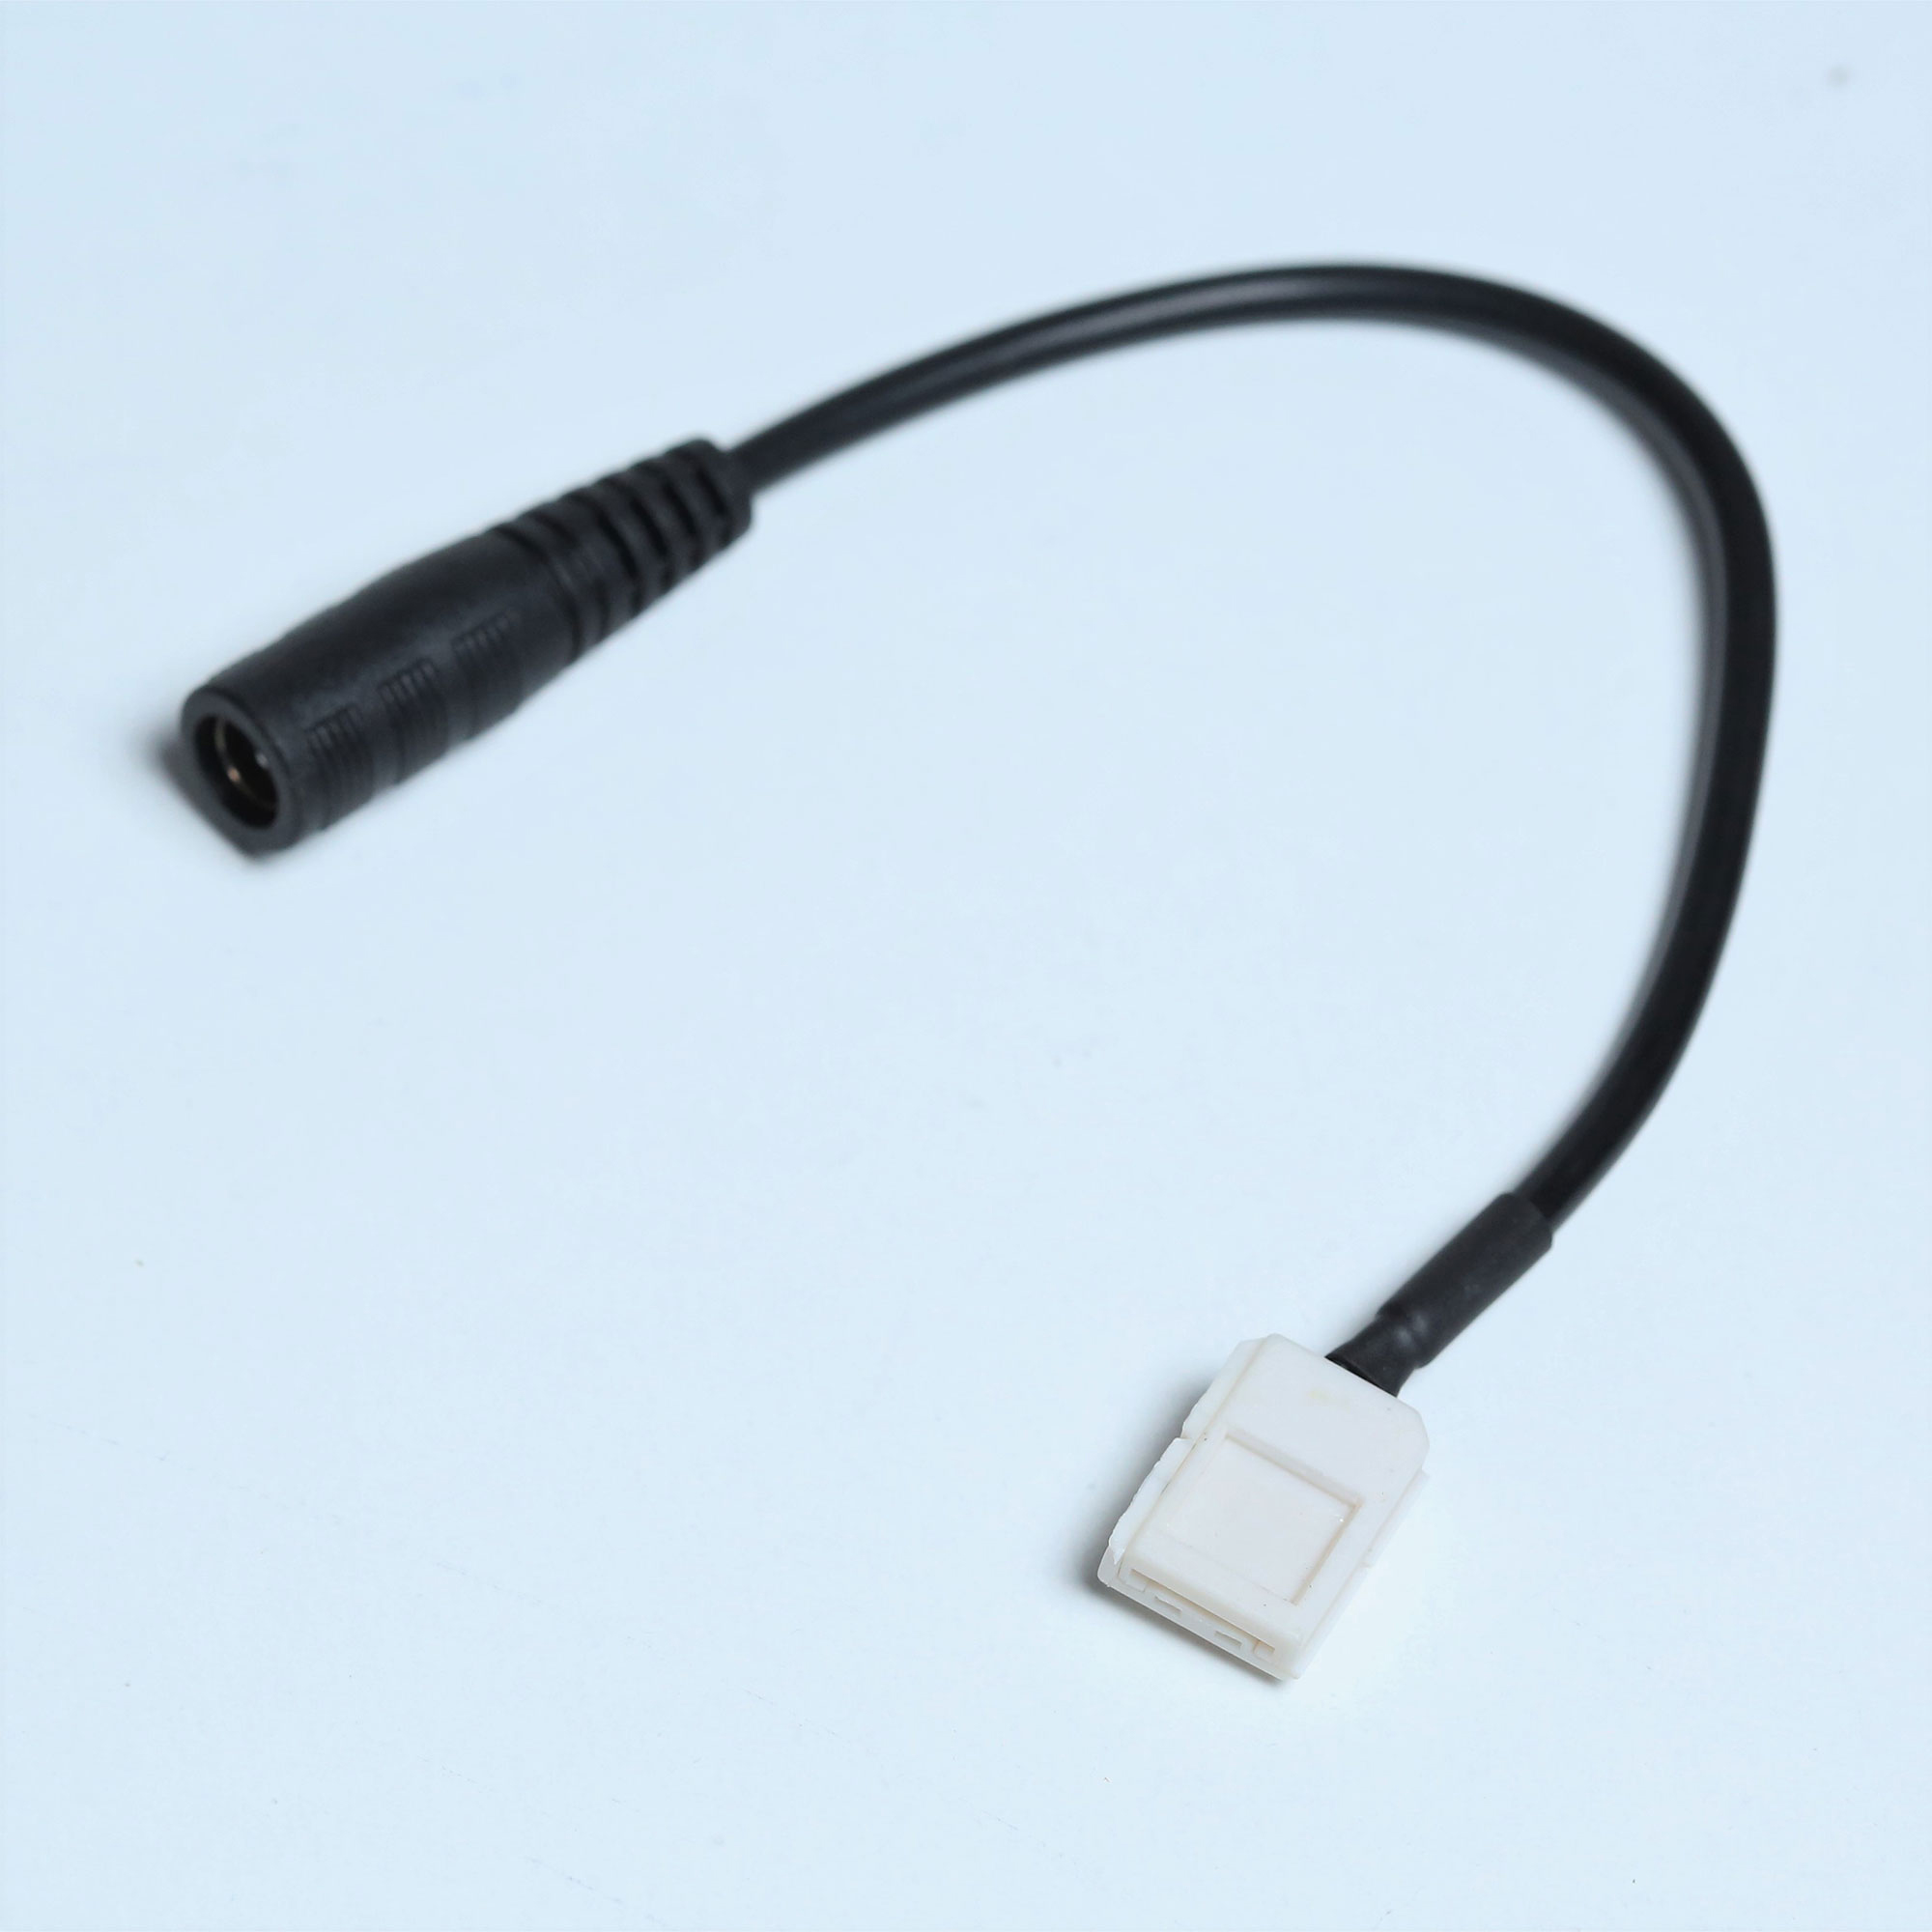 Cable con Conectores - Electronica Guatemala SMD